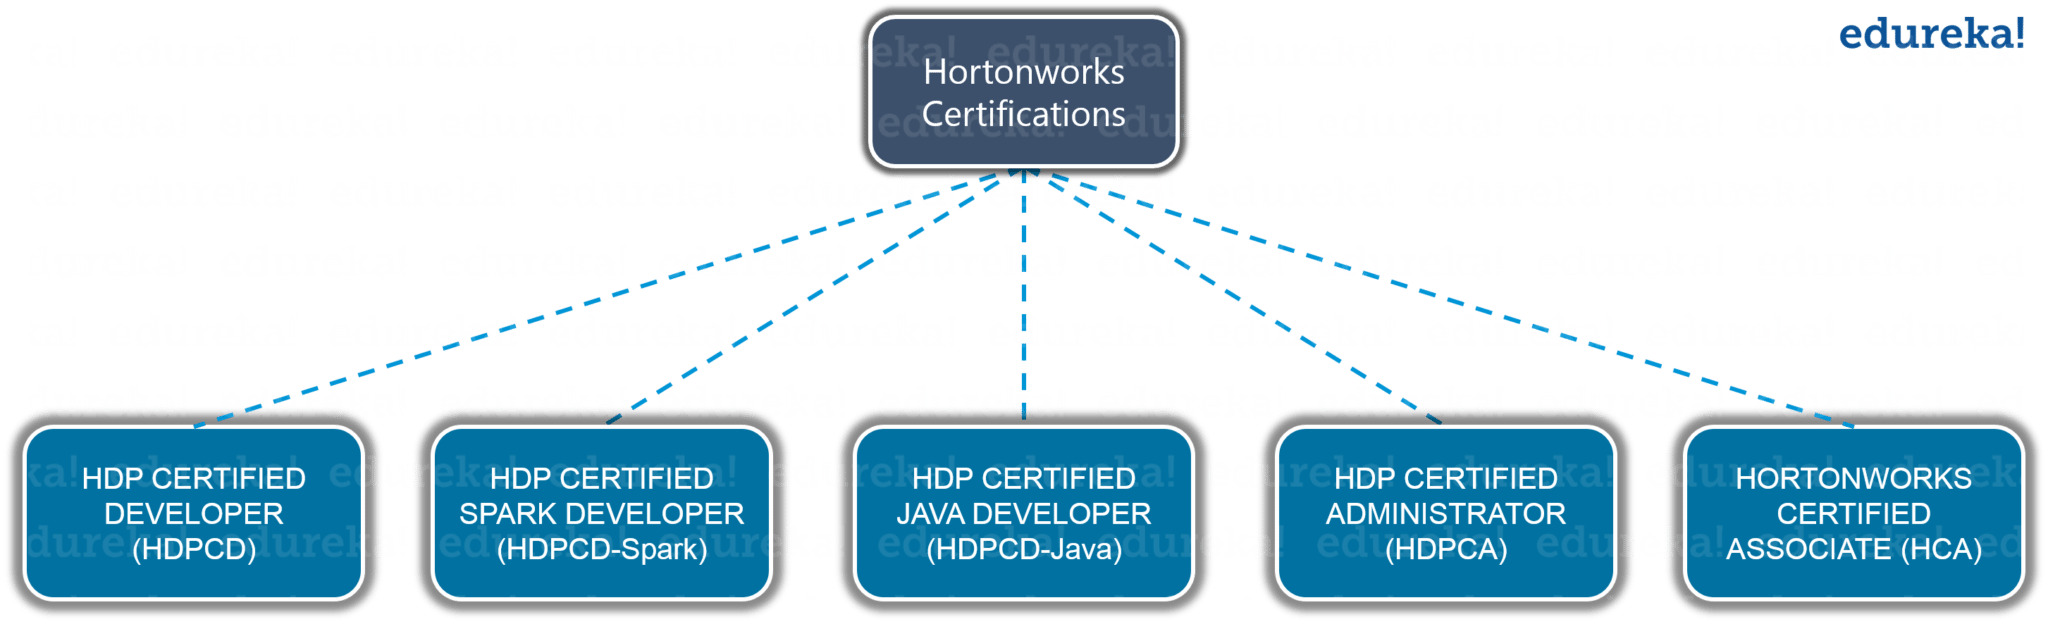 Hortonworks Certifications - Hadoop Certification - Edureka